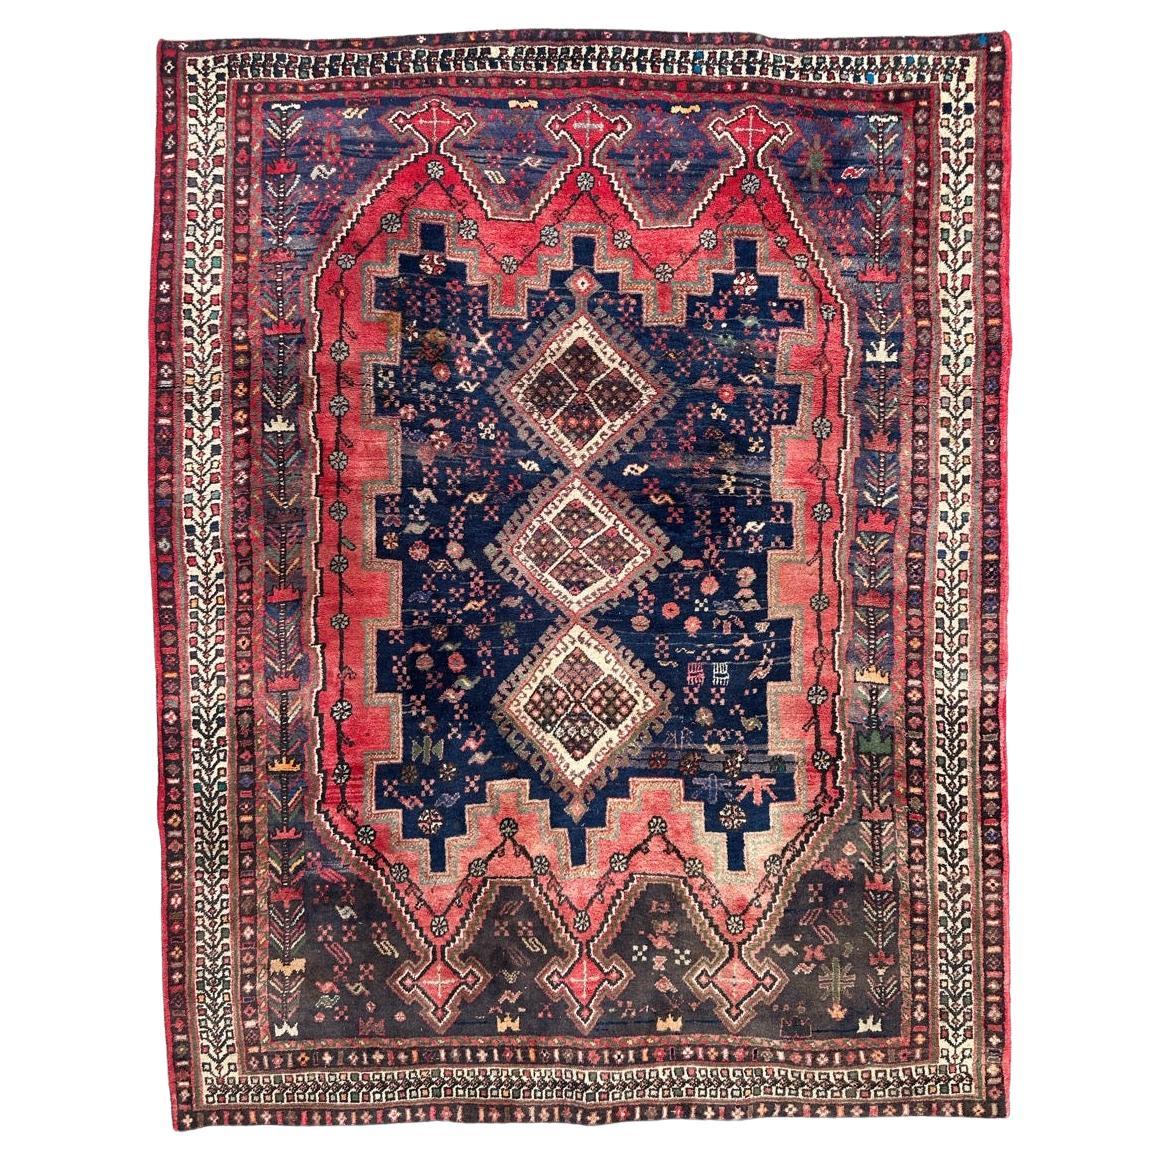 Bobyrug’s Pretty vintage Afshar rug